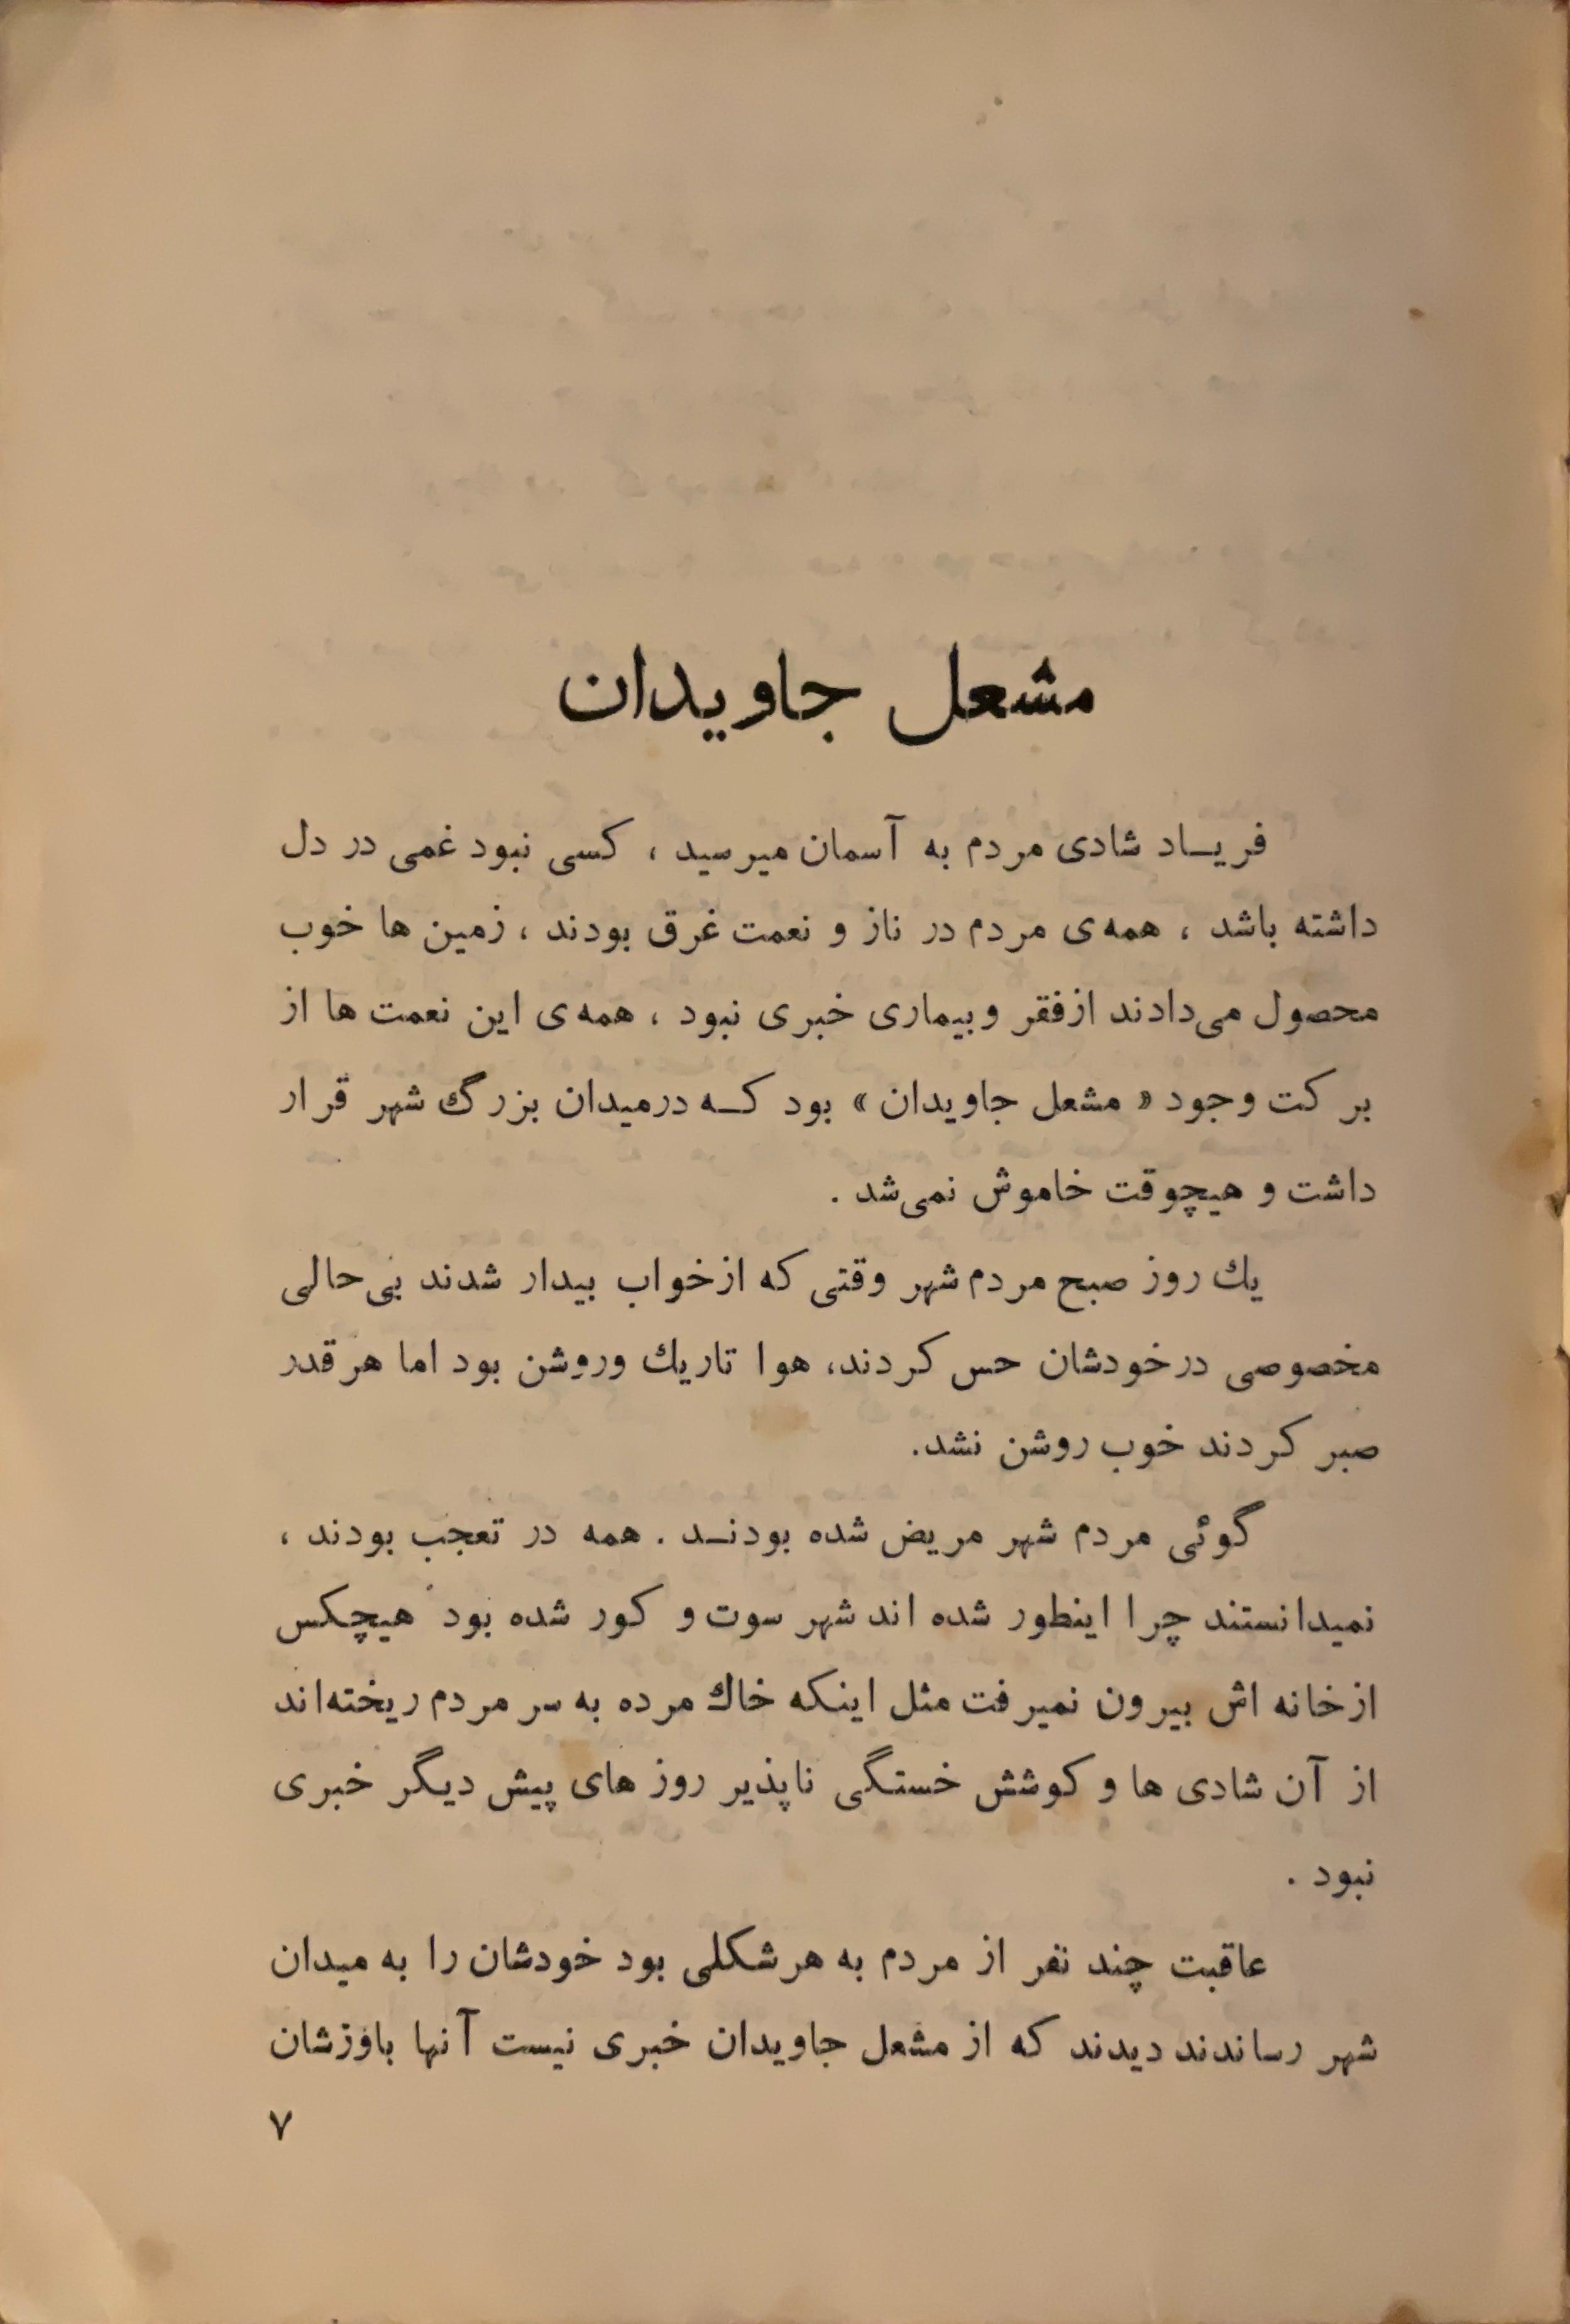 The Ant and the Lion (Farsi) - KHAJISTAN™